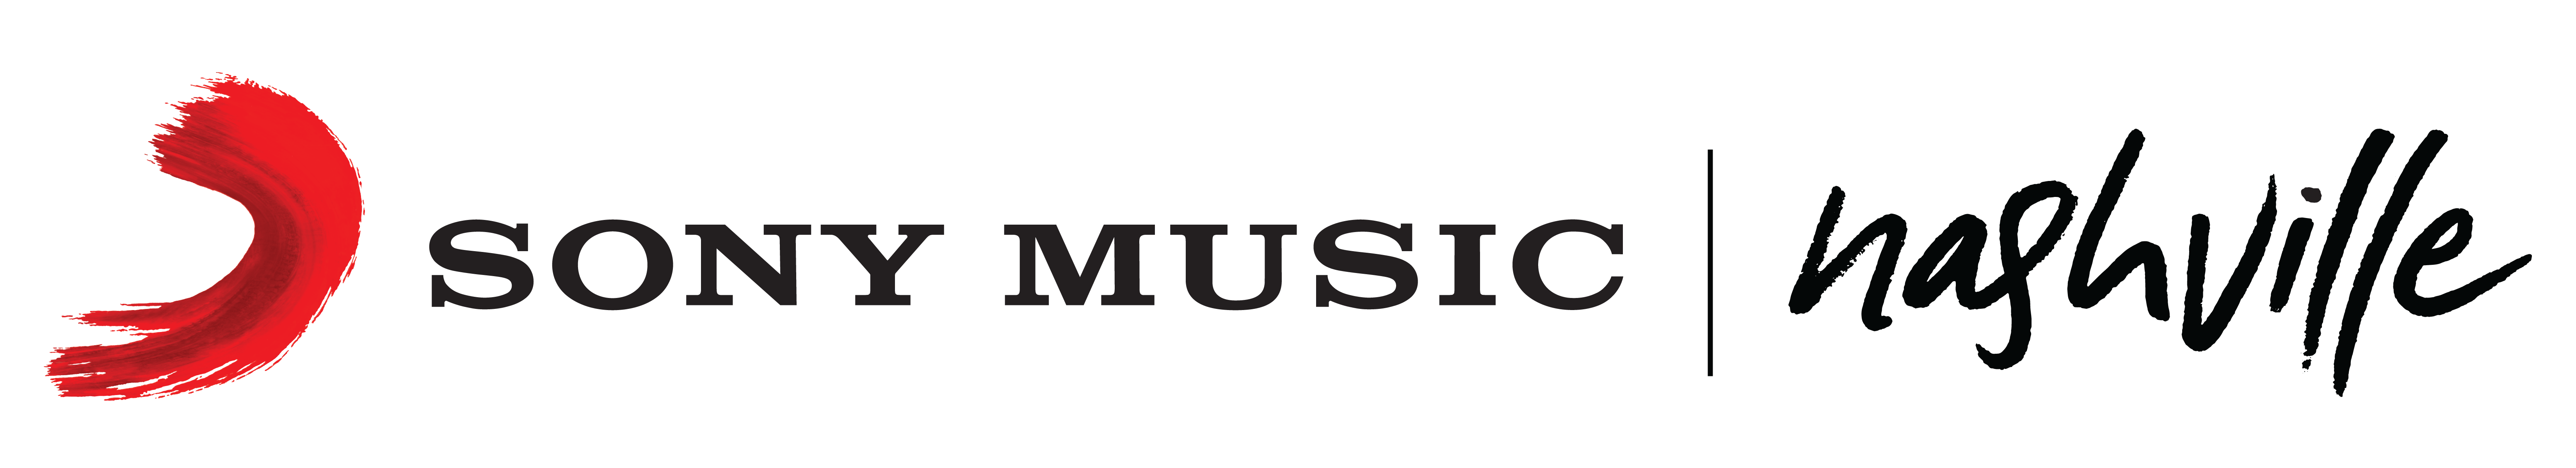 S one music. Sony Music. Логотип сони Мьюзик. Музыкальная компания Sony. Надпись Nashville.